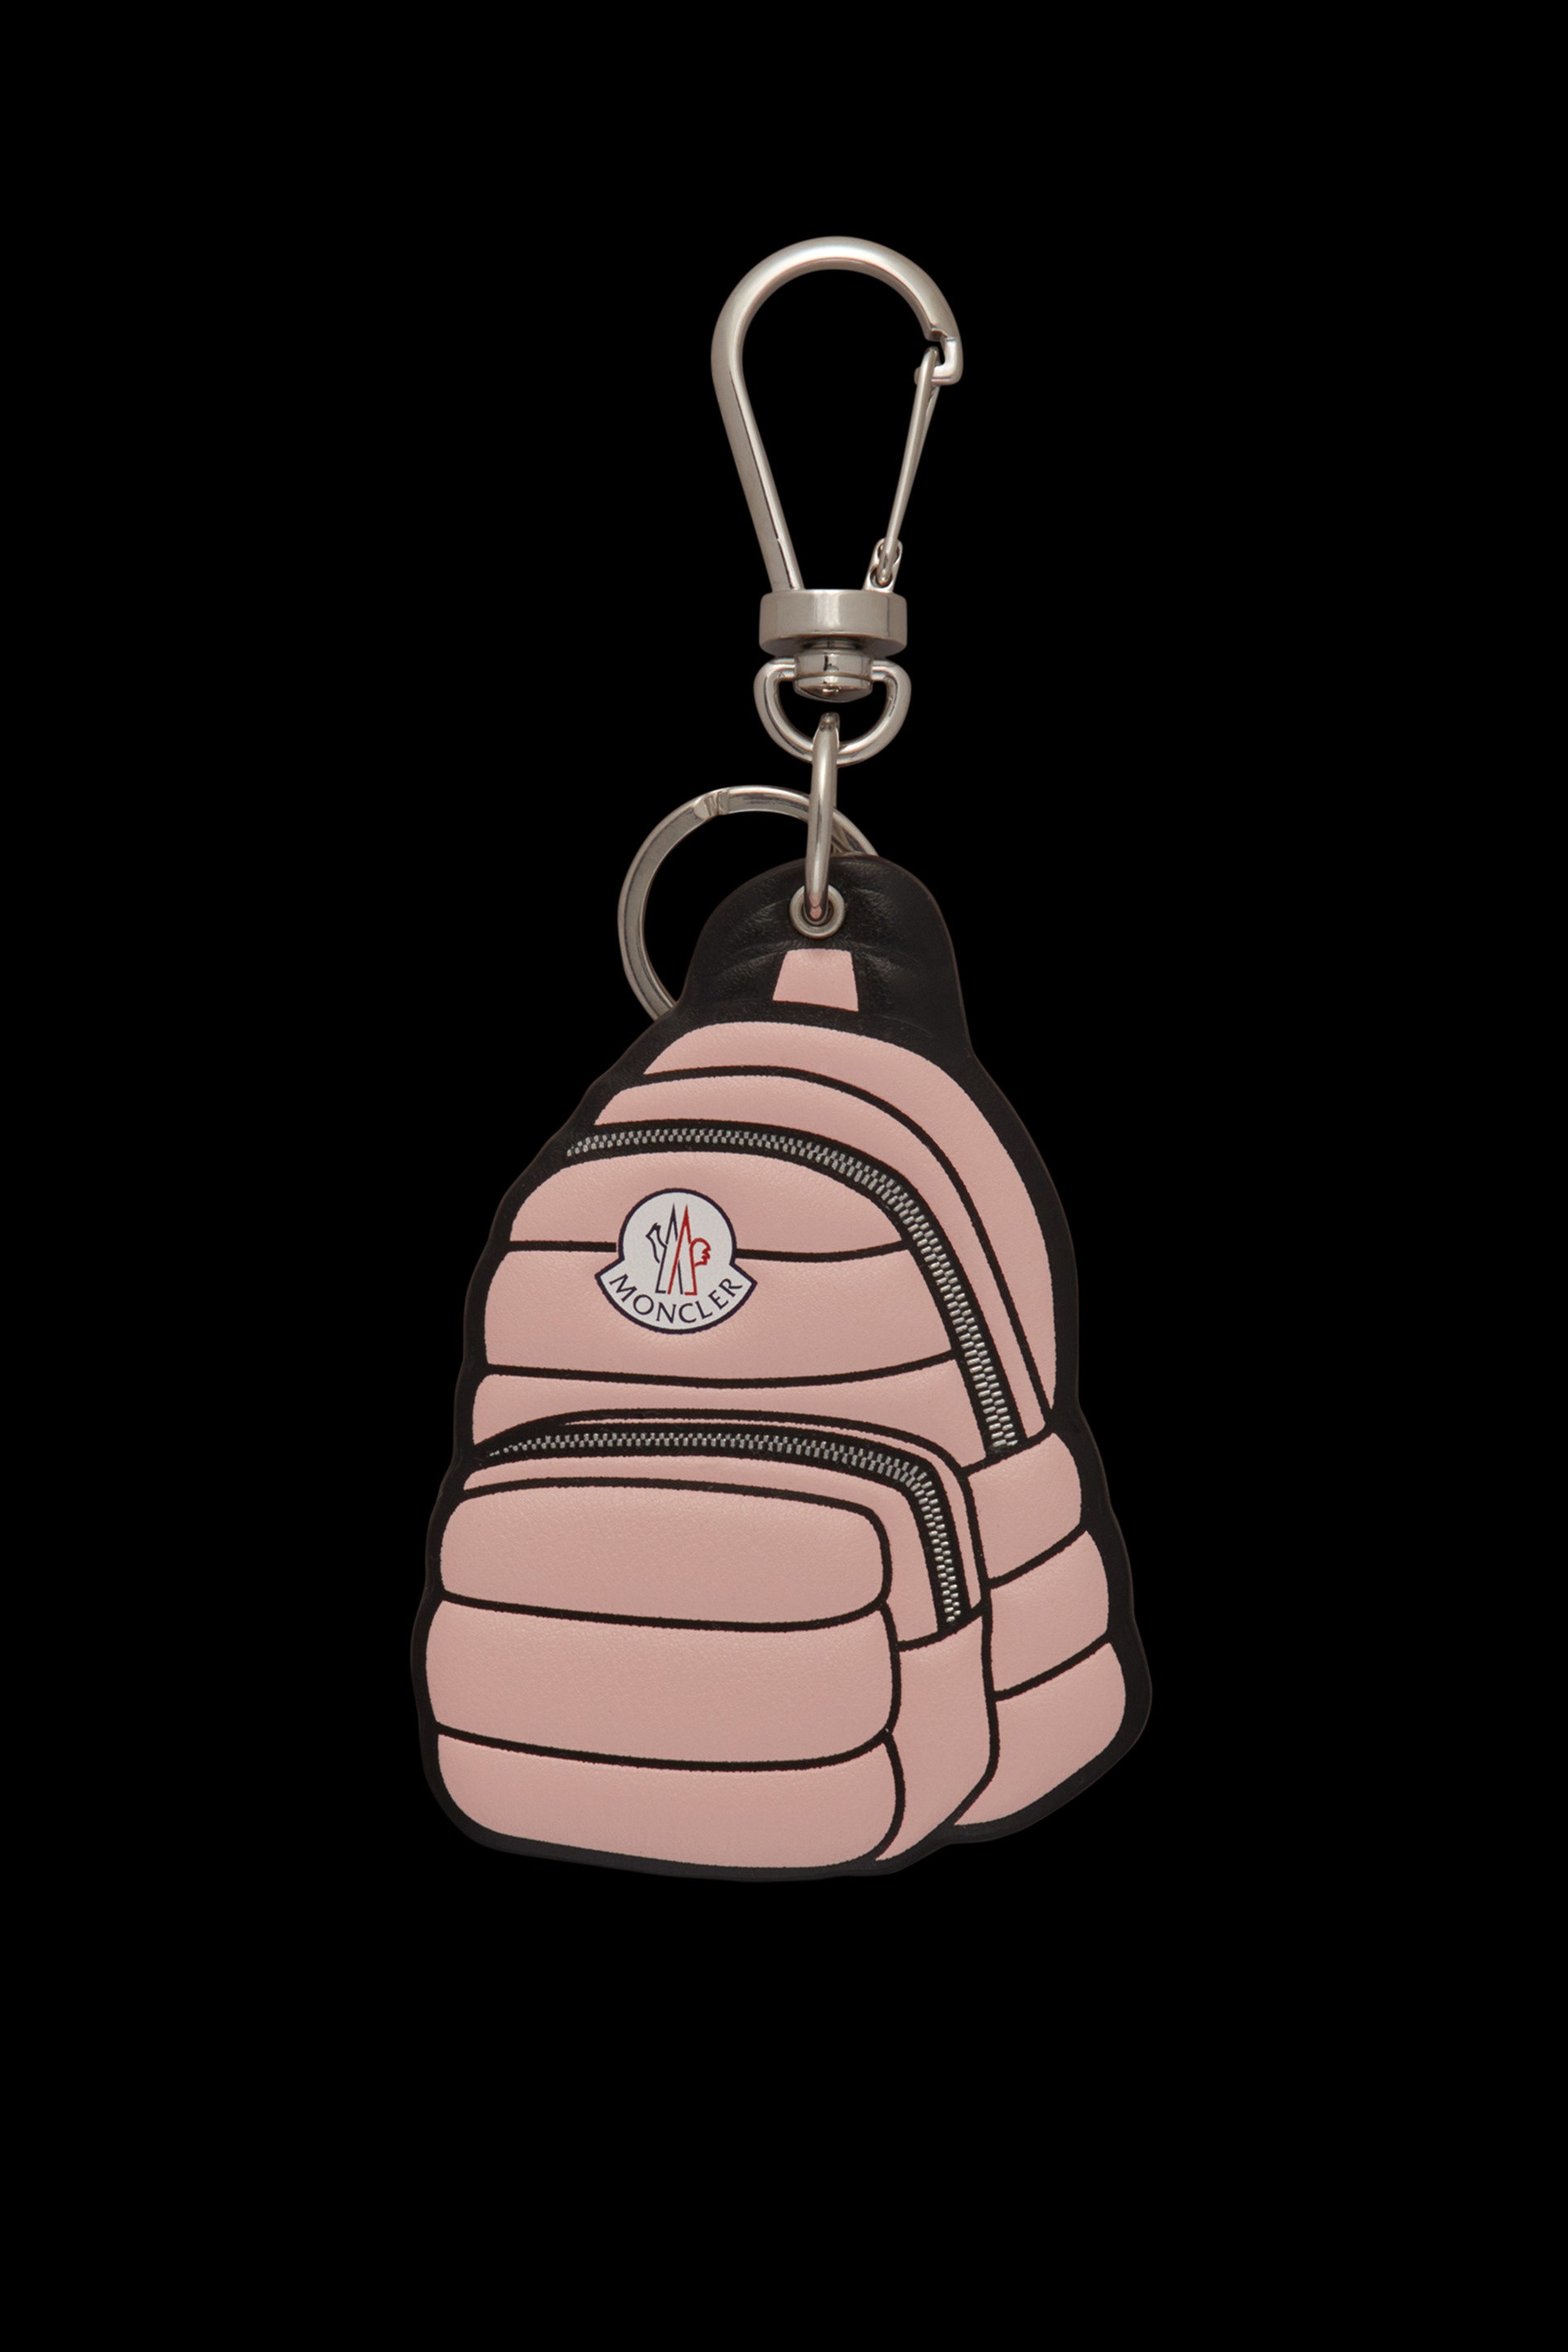 Backpack-Shaped Key Ring - 1